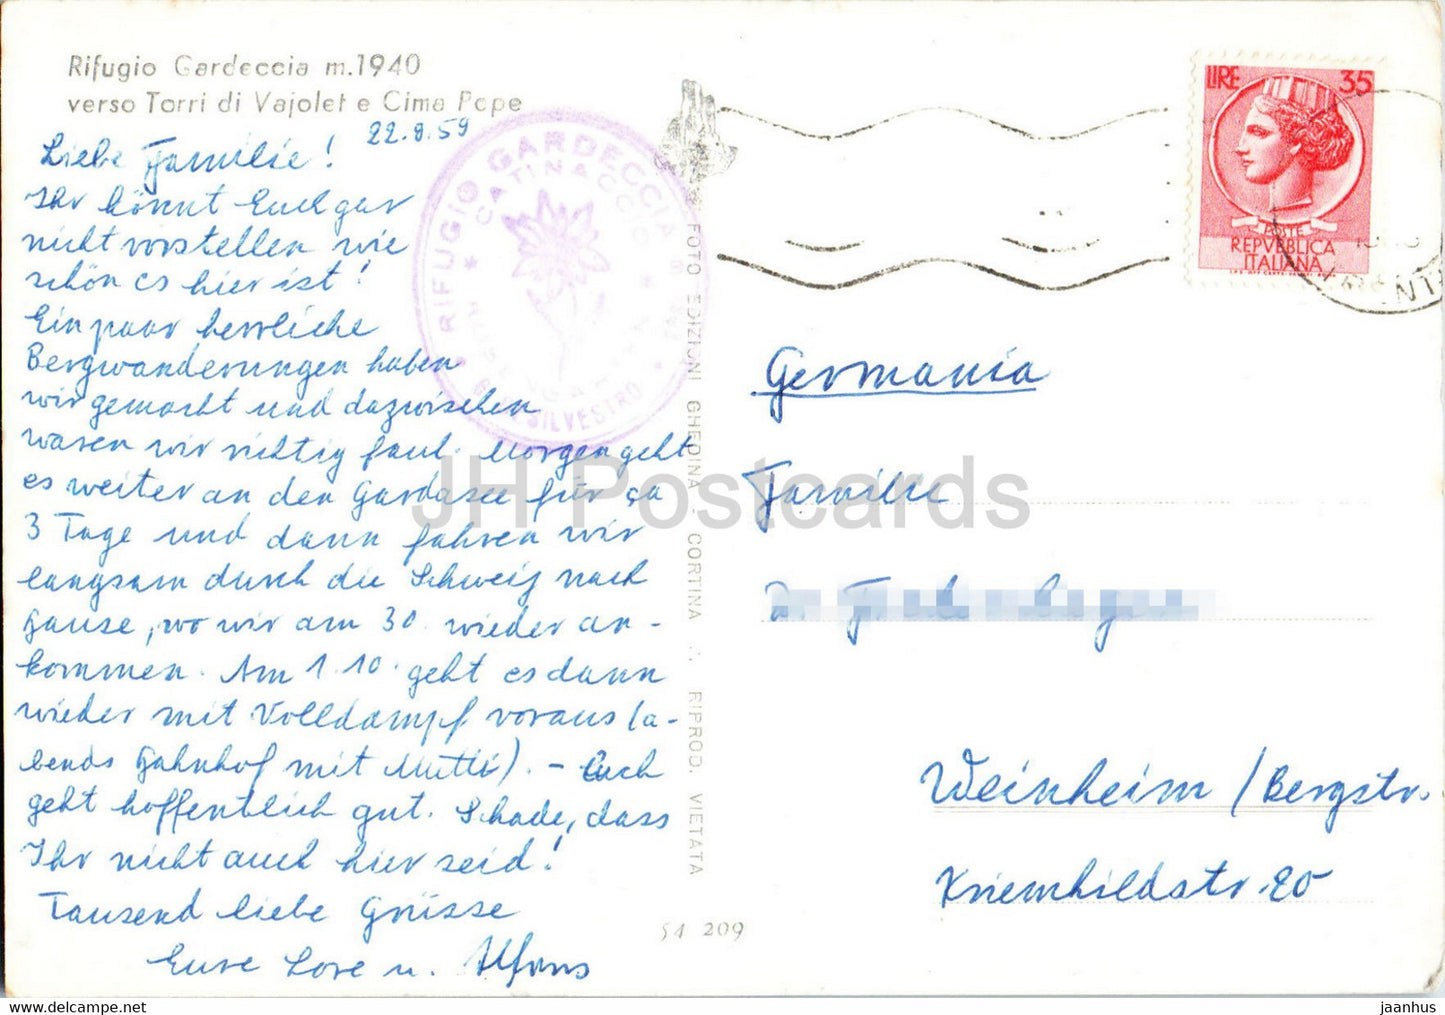 Rifugio Gardeccia - verso Torri di Vajolet e Cima Pope - old postcard - 1959 - Italy - used